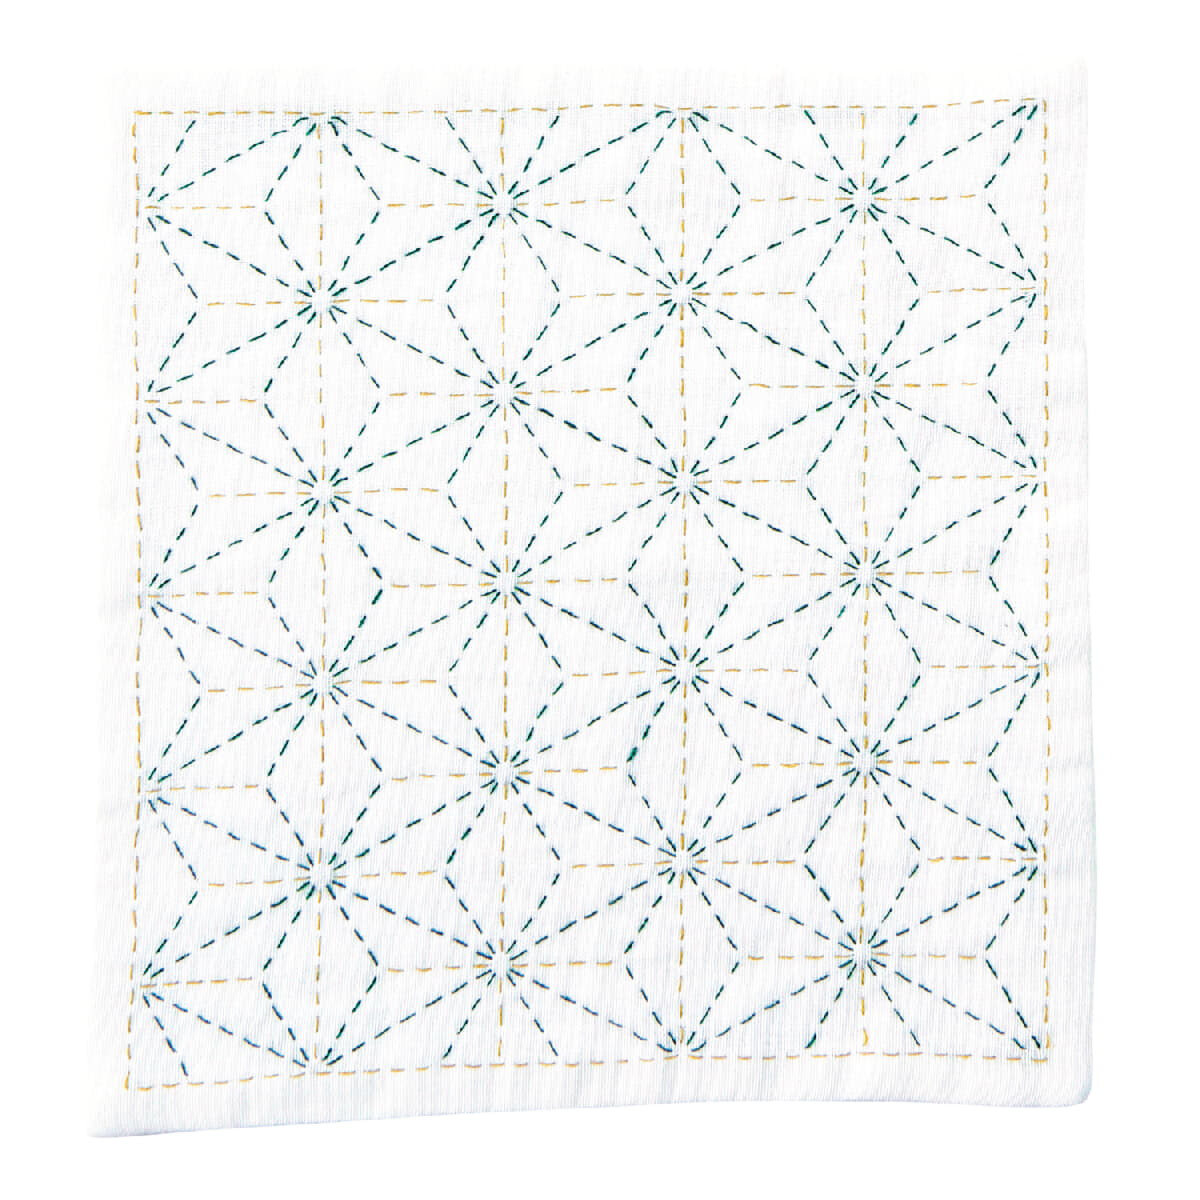 Olympus stamped Sashiko stitch kit "Handkerchief...